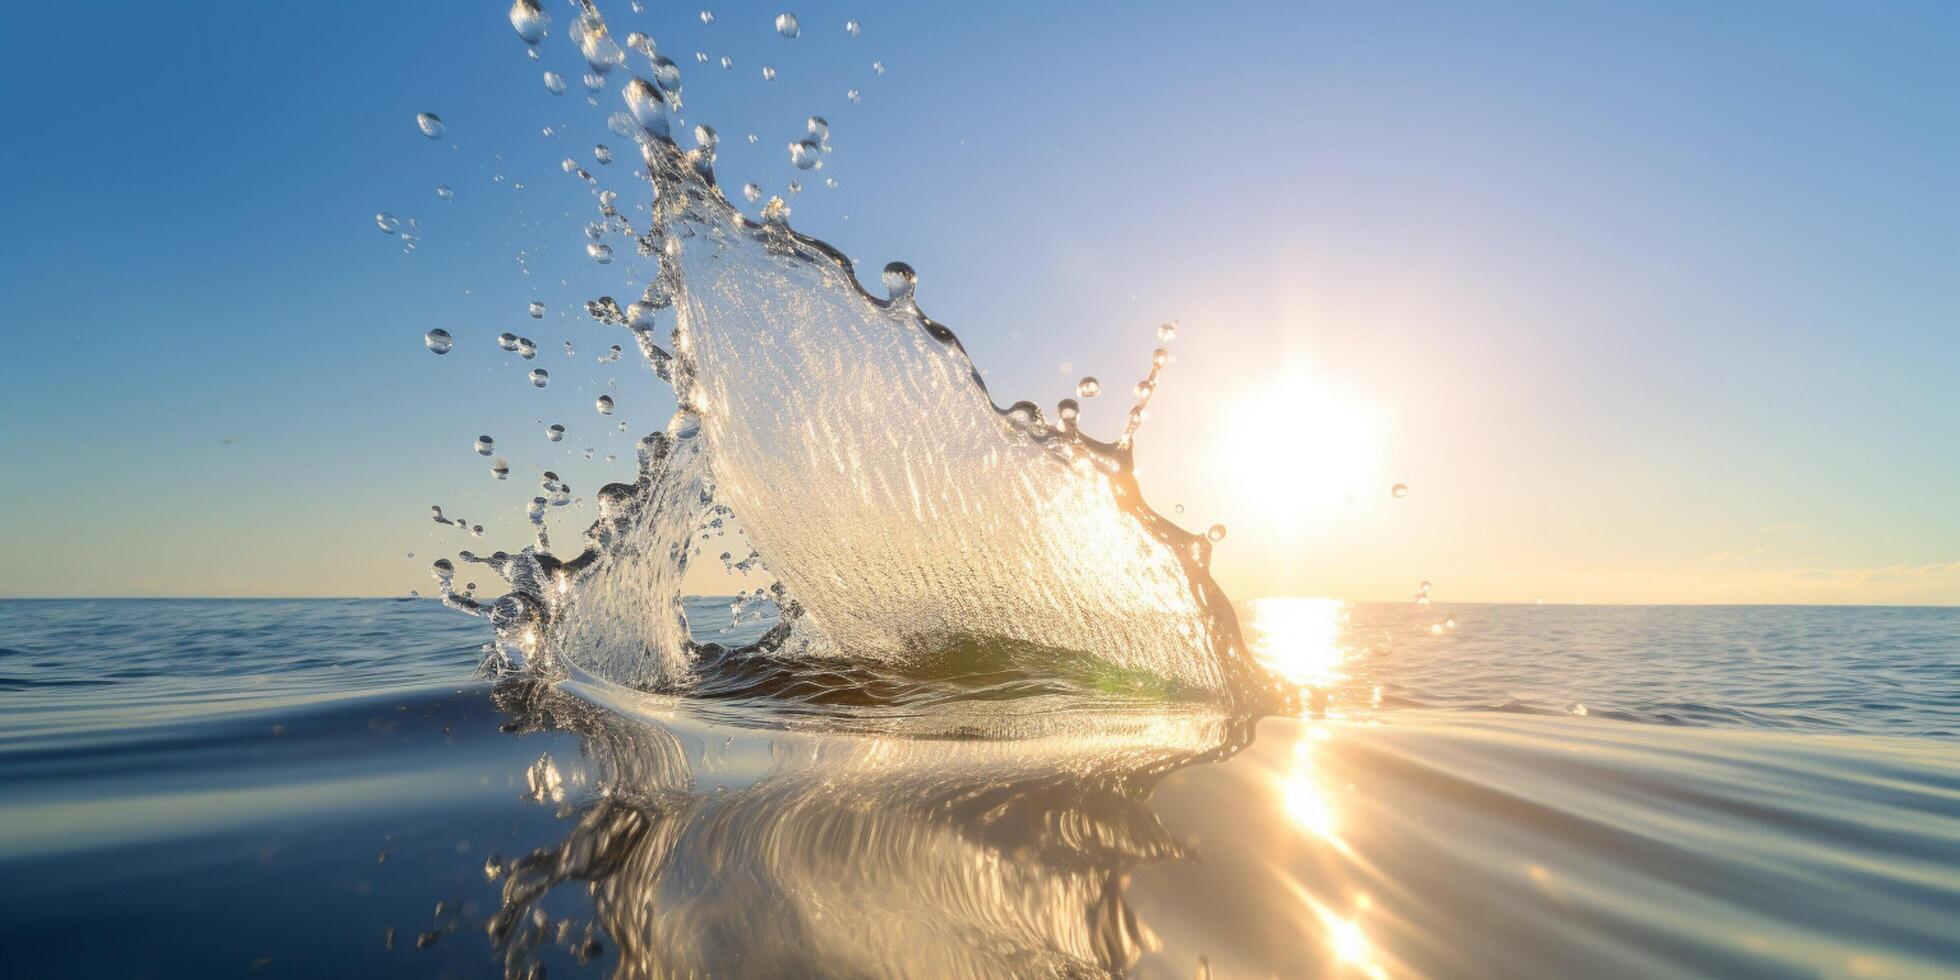 Water splash with sun shining photo